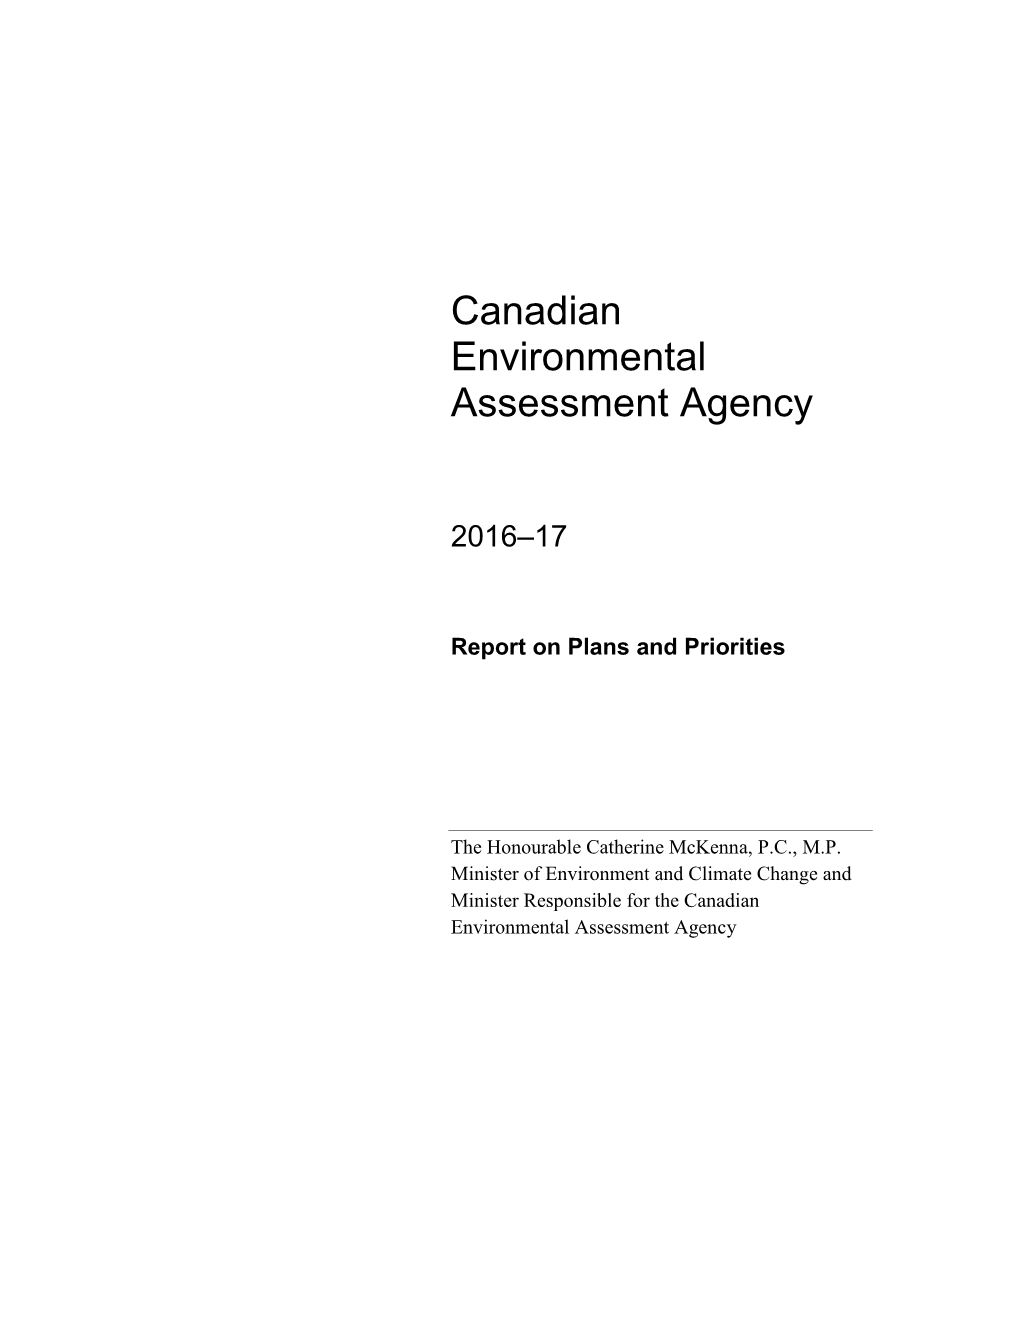 Canadian Environmental Assessment Agency